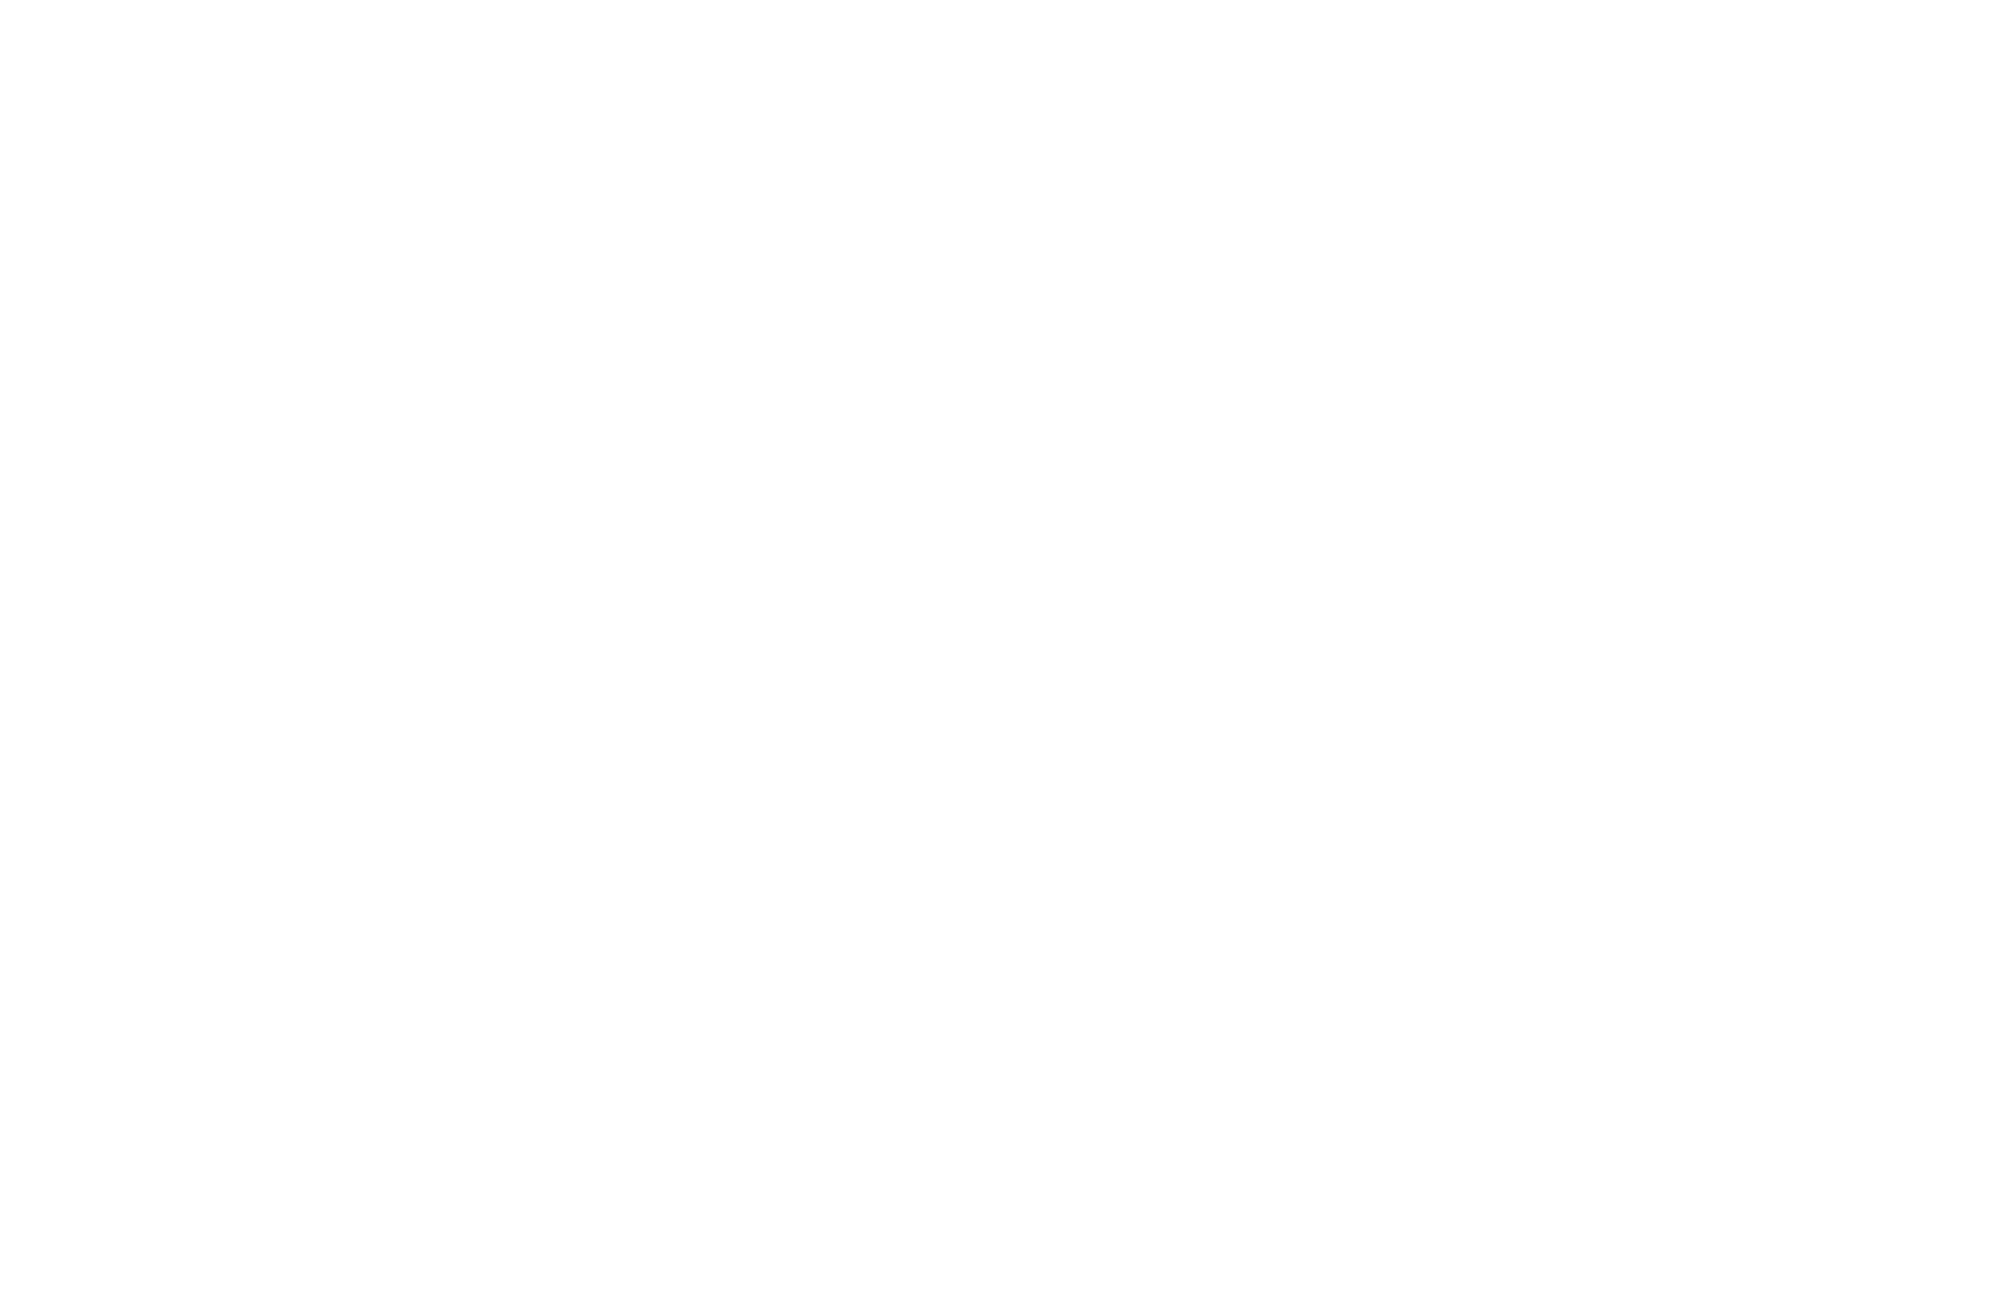 MIT-Bootcamps-2017-G-Transpar